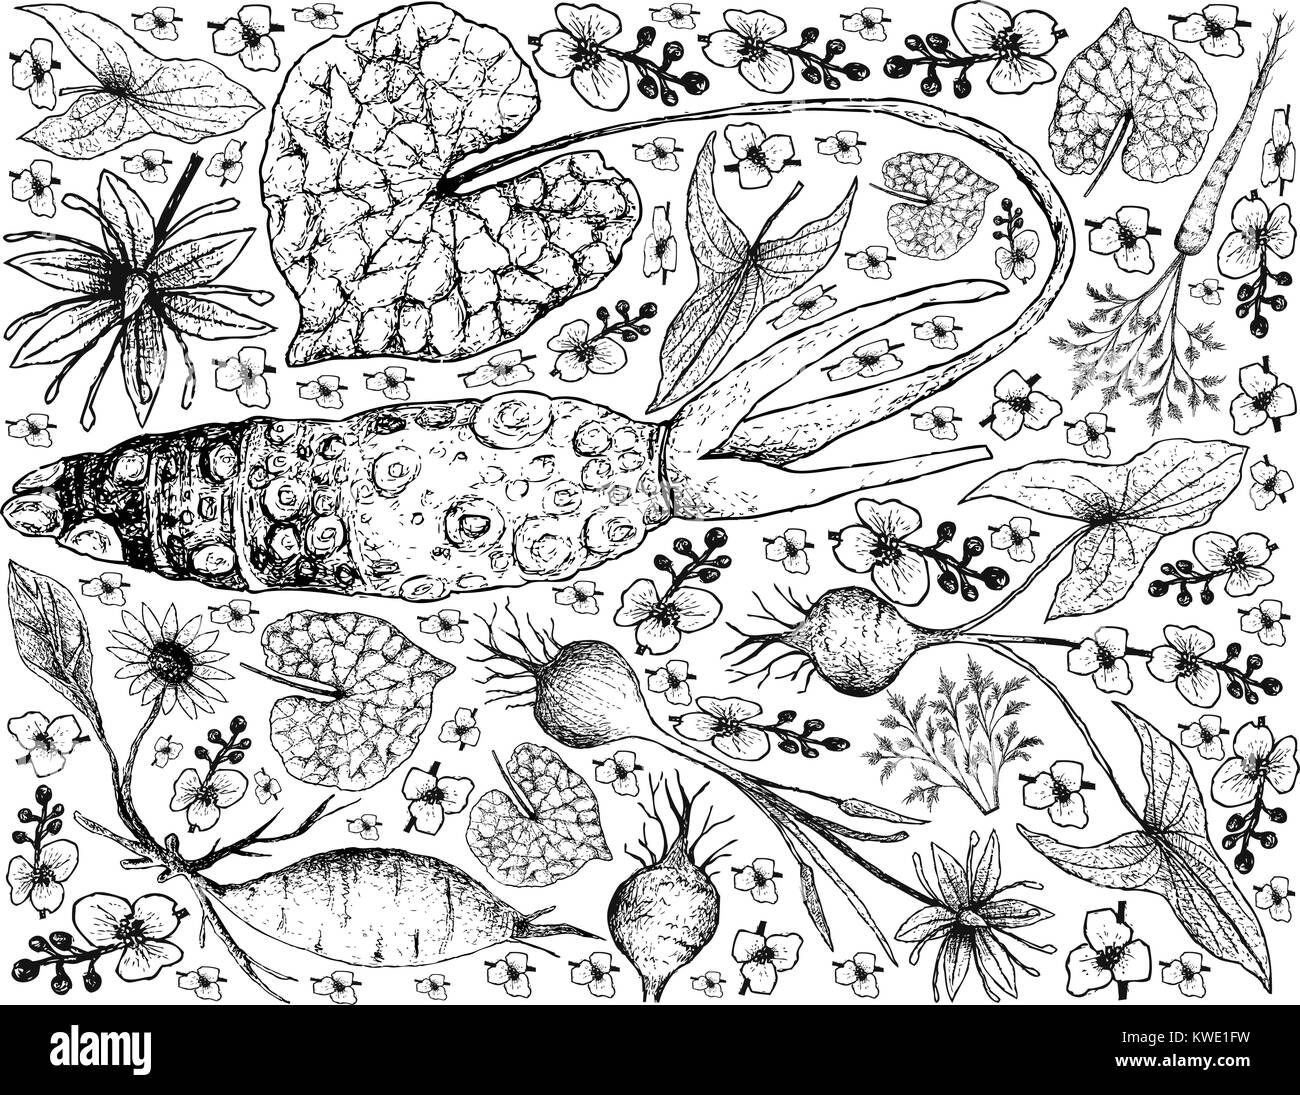 Root and Tuberous Vegetables, Illustration Background of Hand Drawn Sketch of Fresh Hamburg Parsley, Yacon, Wasabi, Camas and Broadleaf Arrowhead Plan Stock Vector